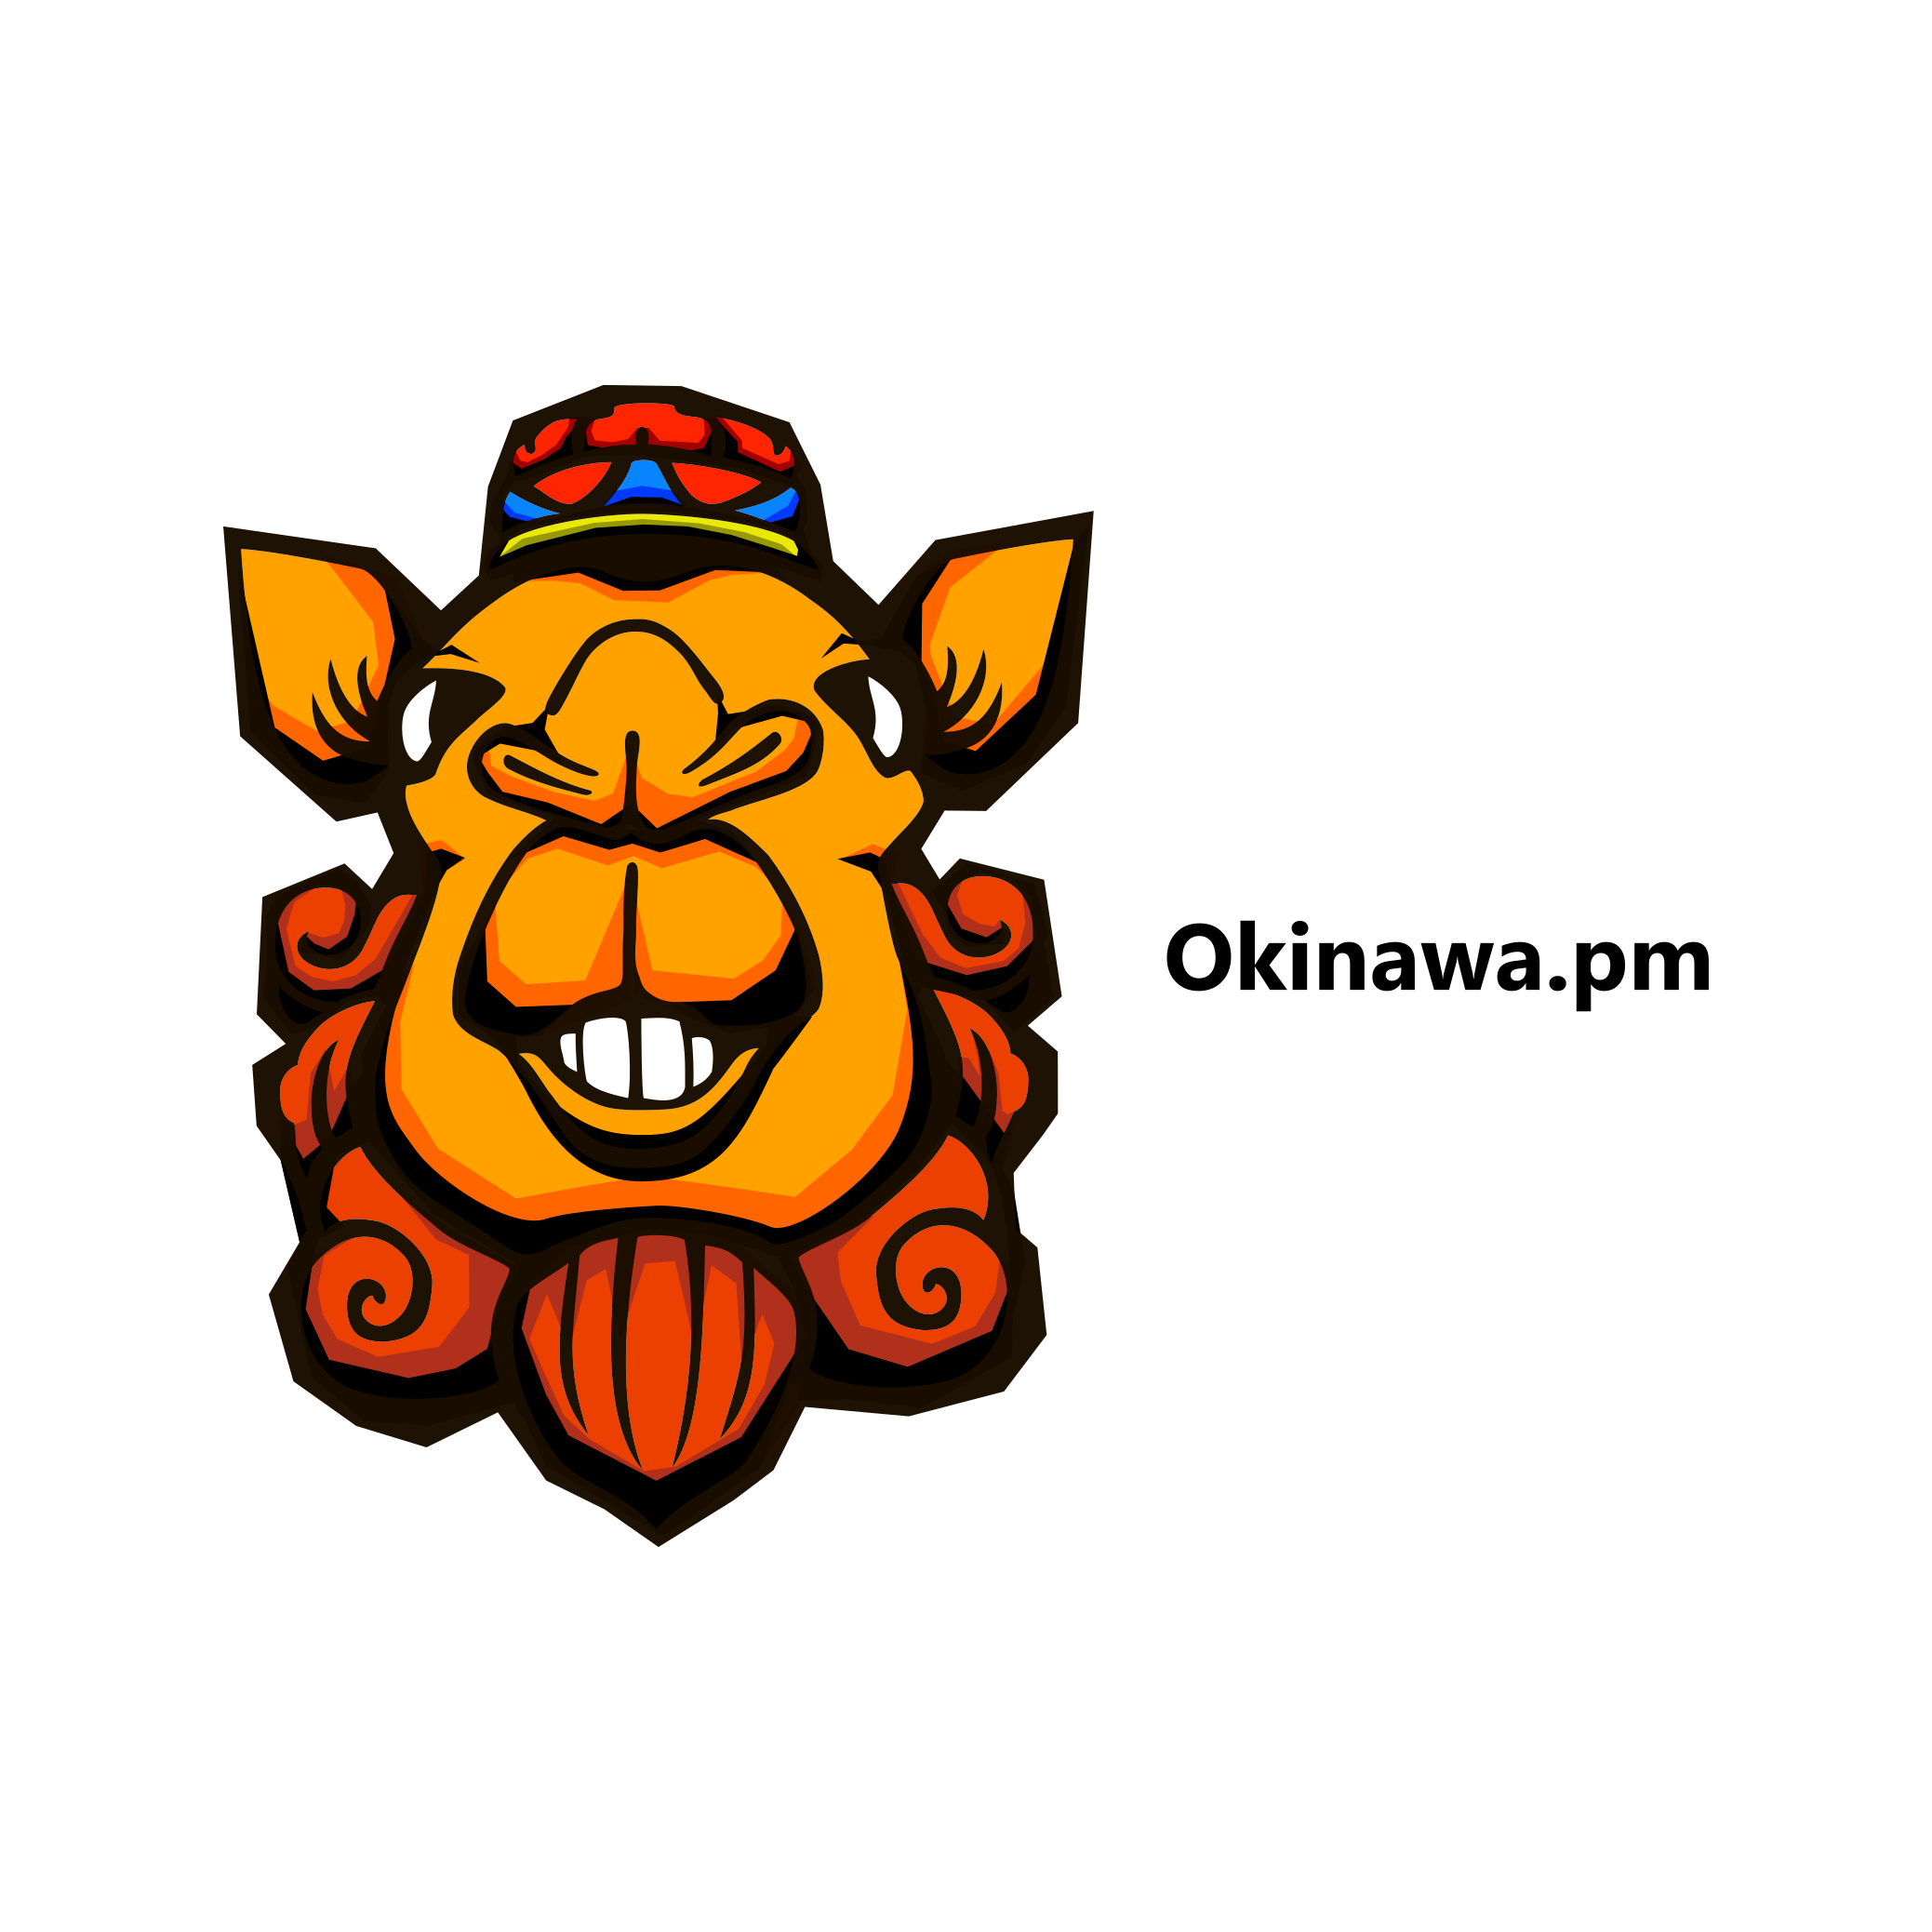 Okinawa.pm